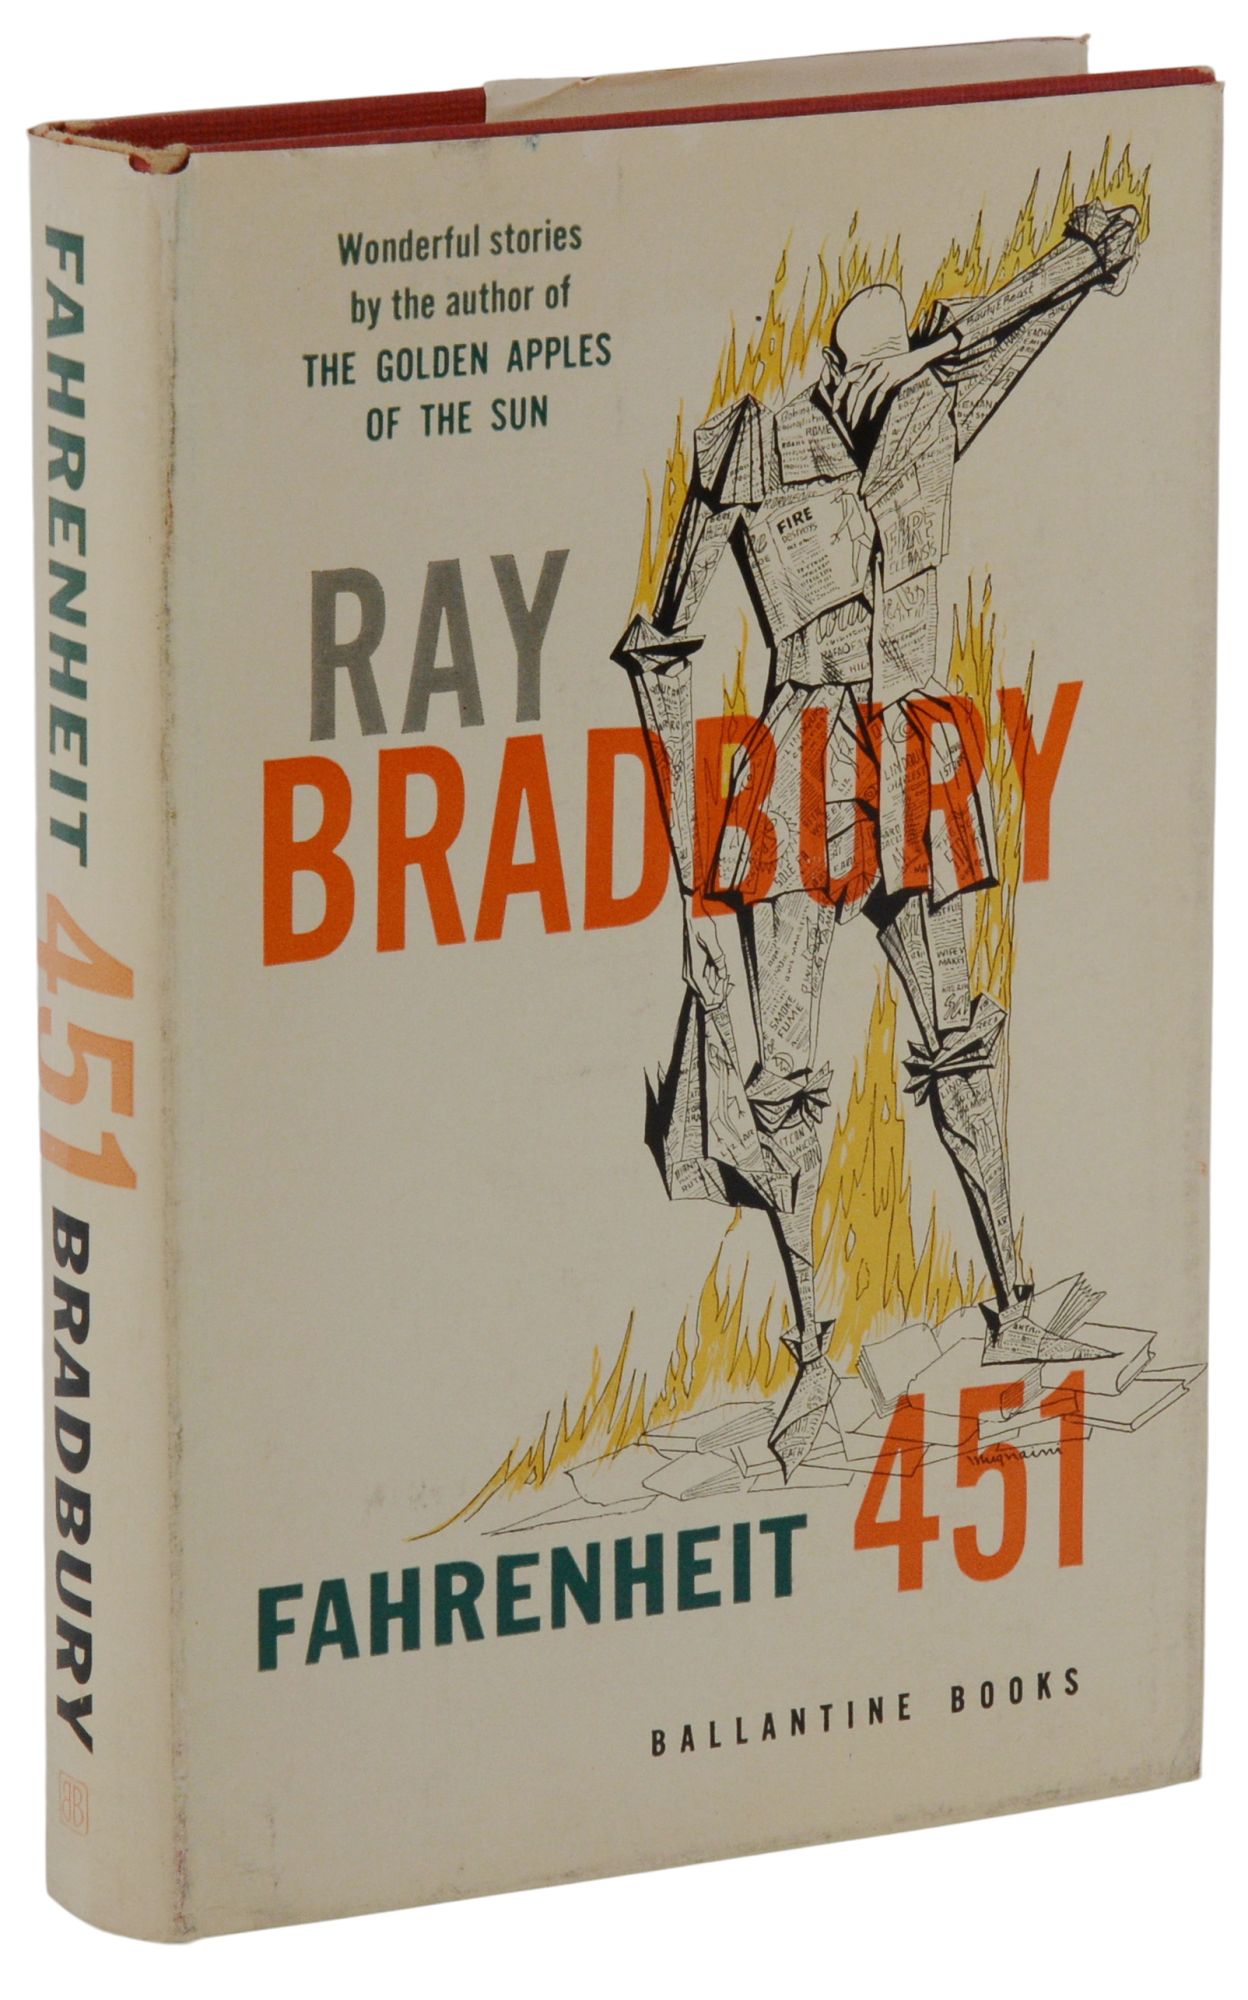 FAHRENHEIT 451 - SIGNED BY RAY BRADBURY - TRUE FIRST PRINTING